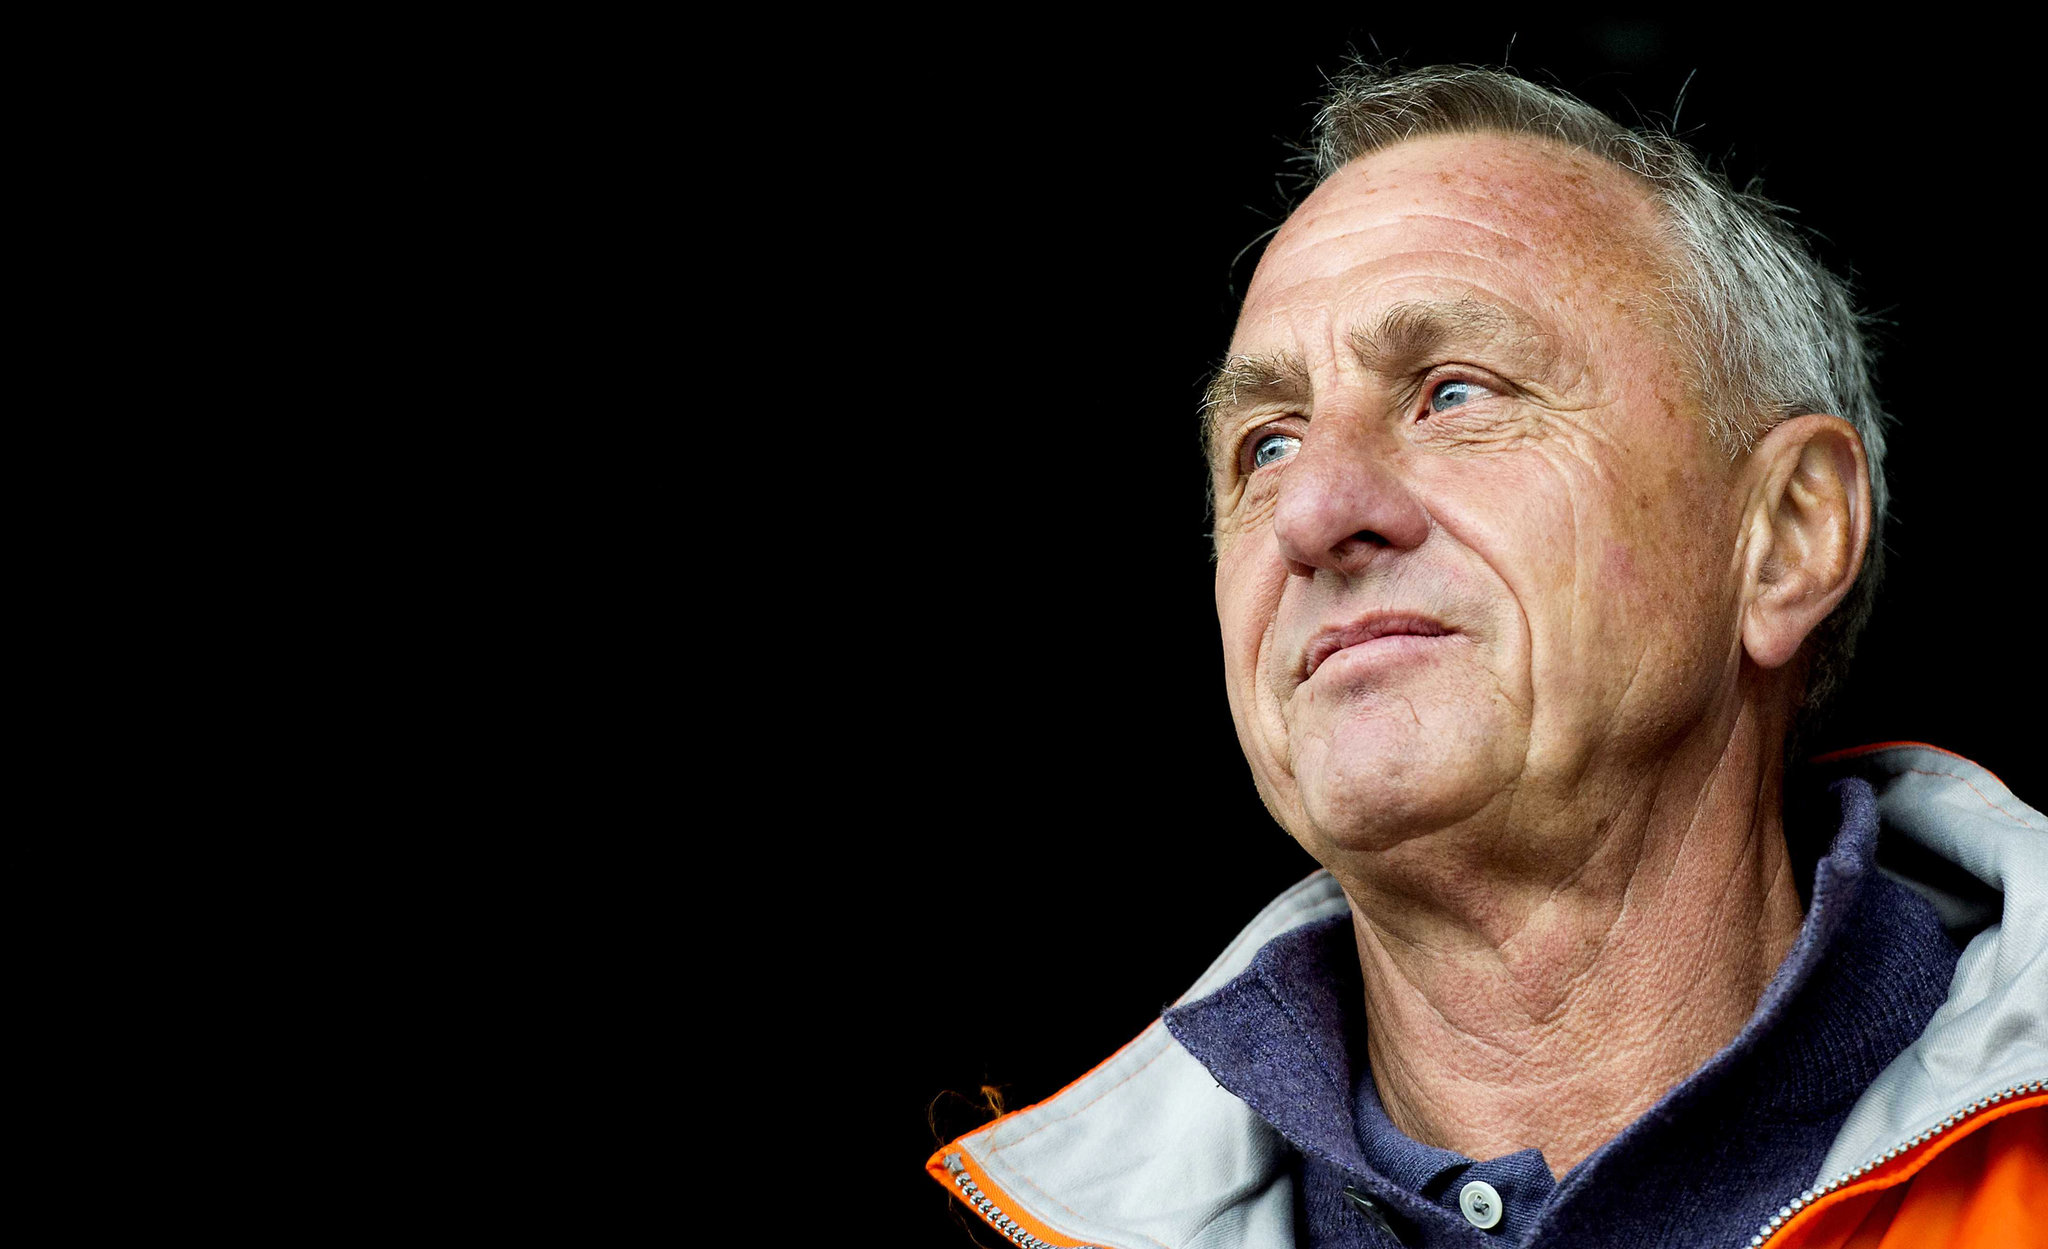 Johan Cruyff suffers from lung cancer